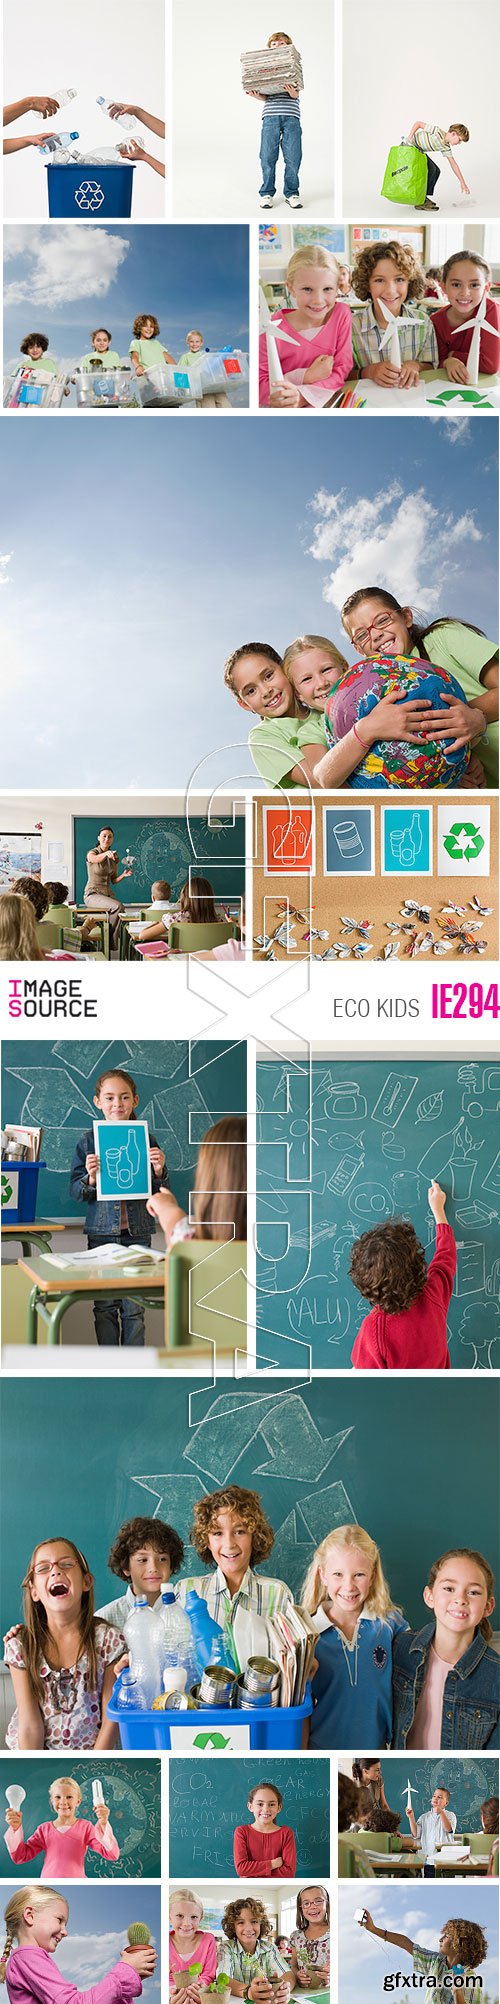 Image Source IE294 Eco Kids